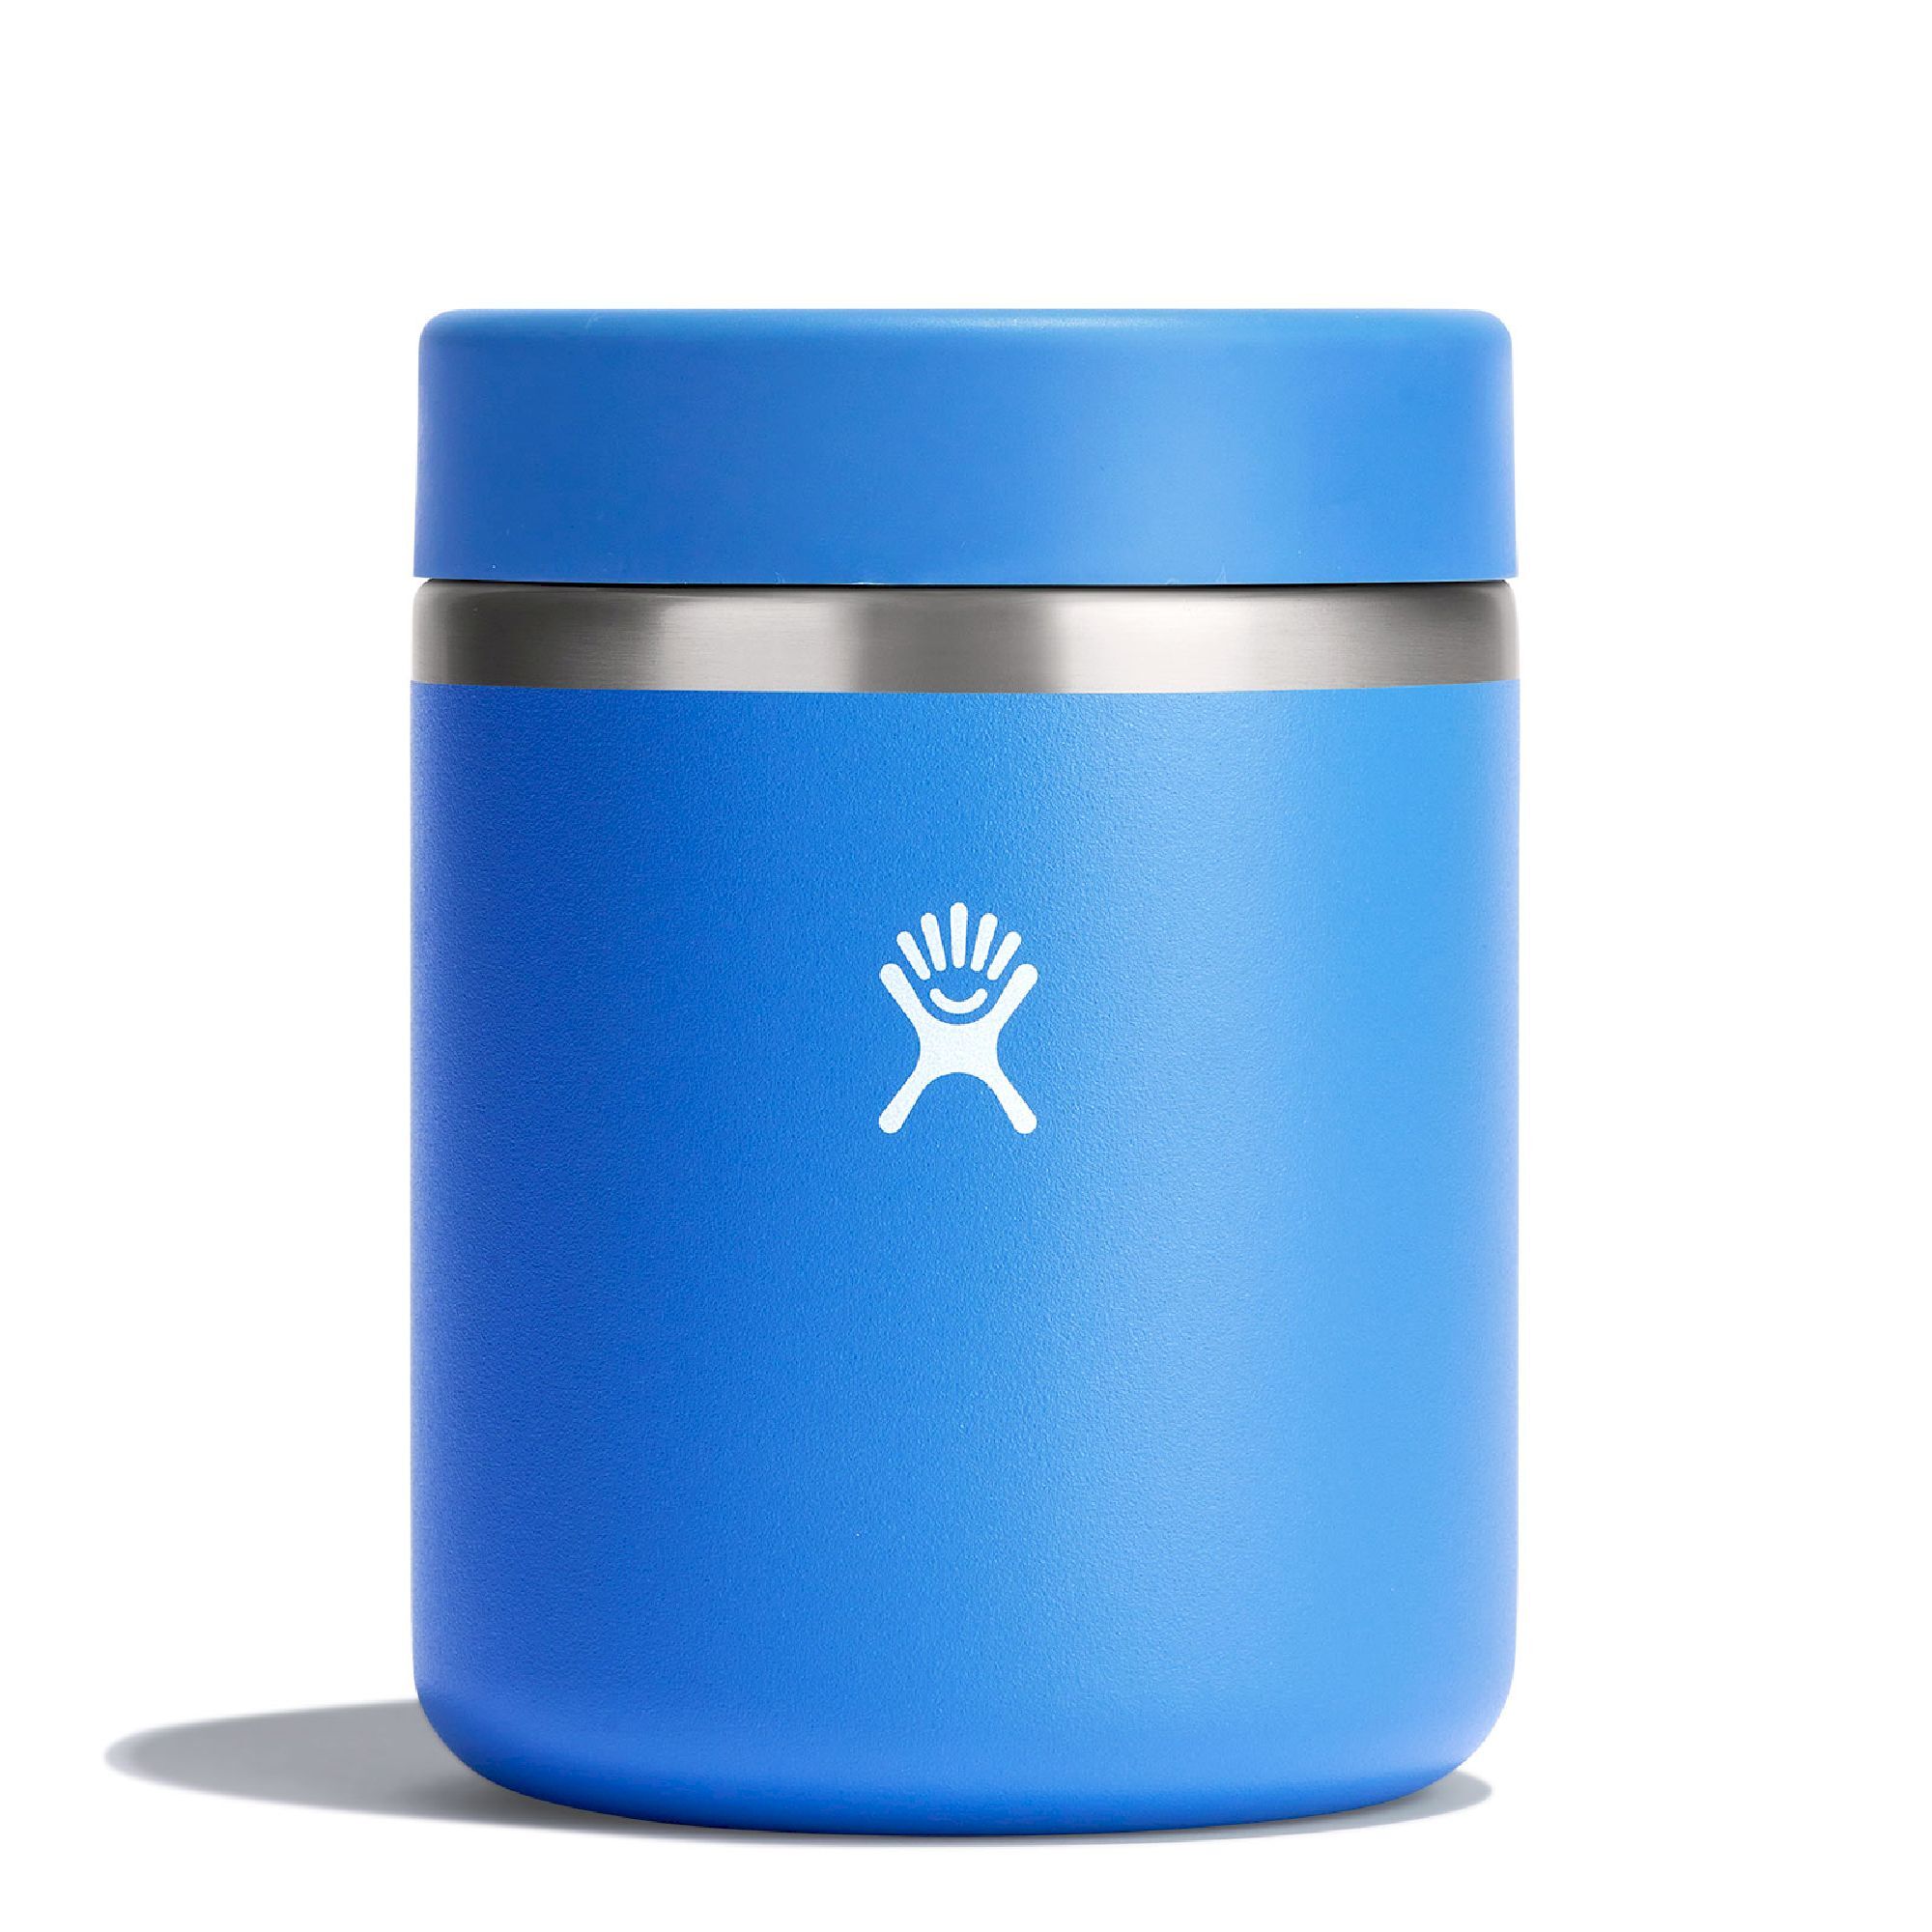 Hydro Flask 28 Oz Insulated Food Jar - Conservación de alimentos